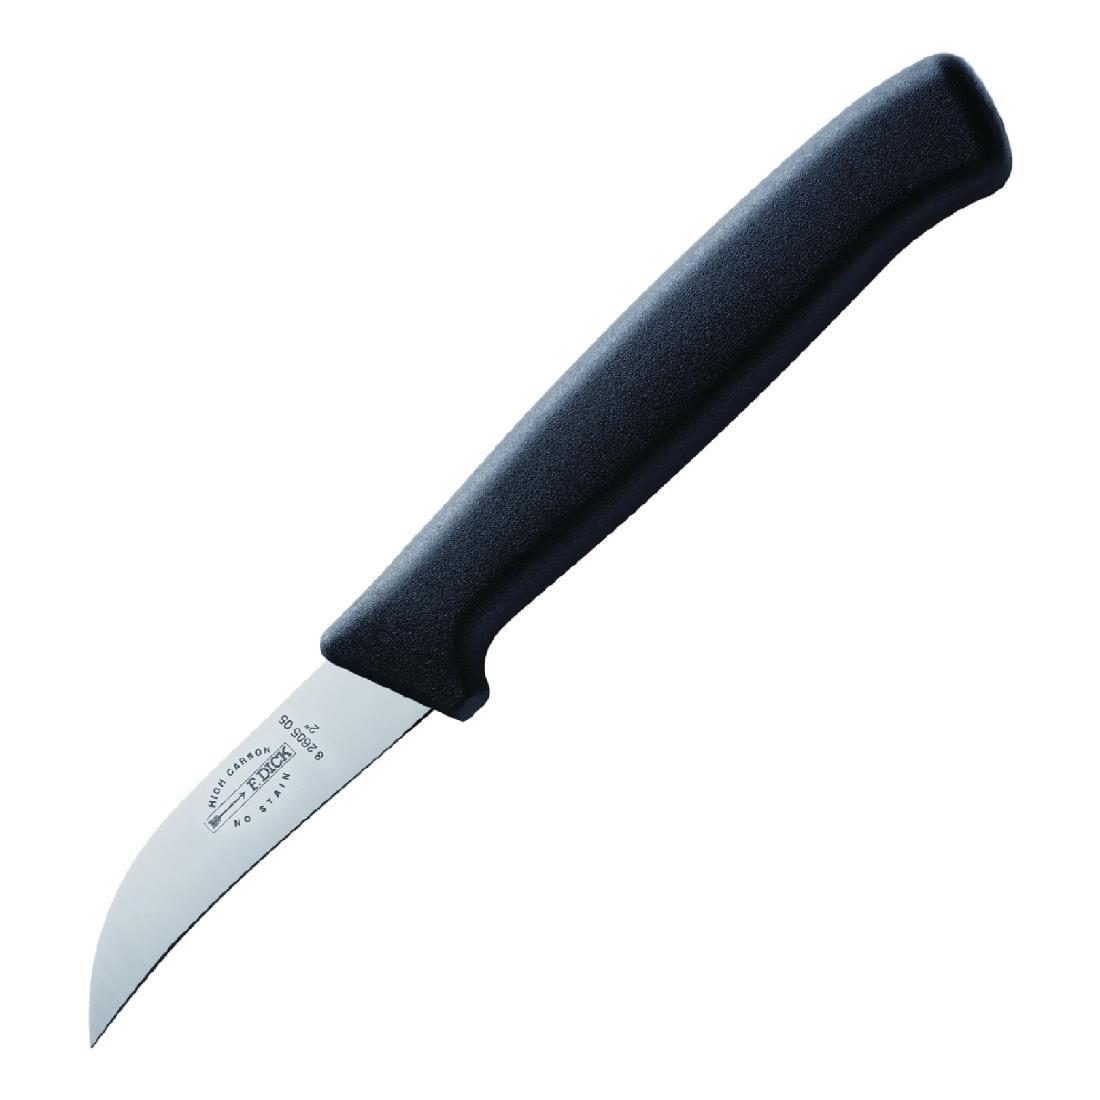 Dick Pro Dynamic Paring Knife 5cm - GD768  - 1